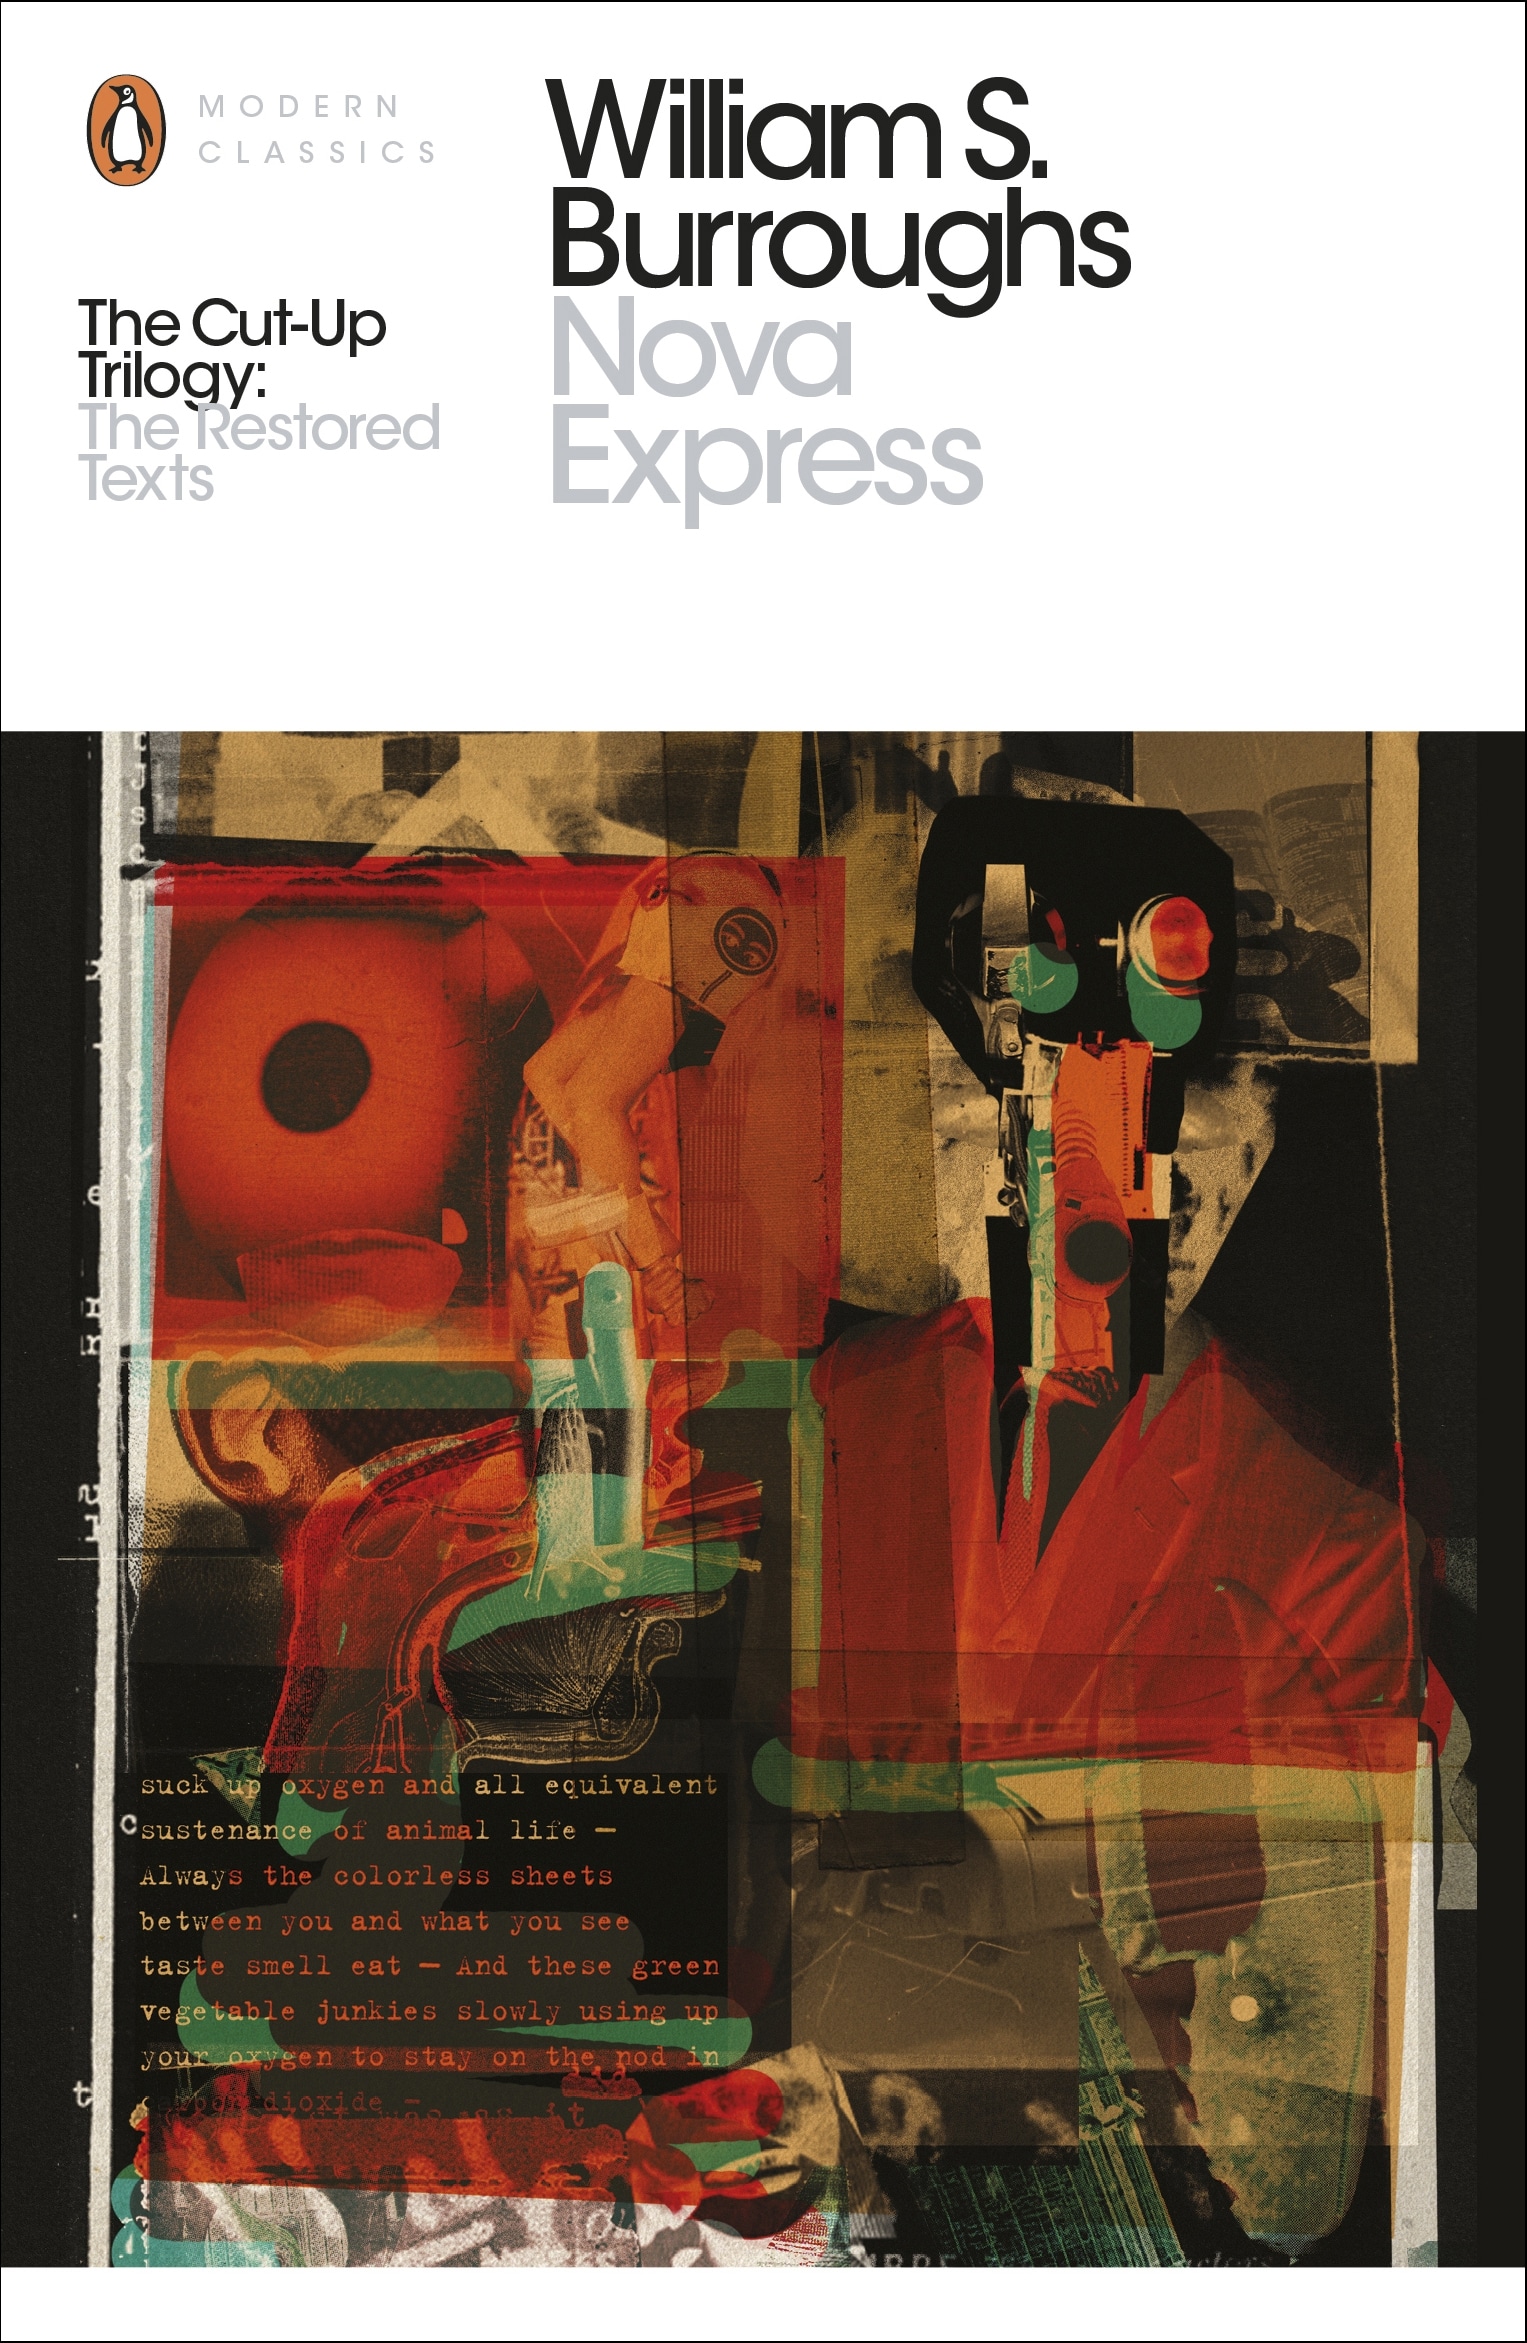 Book “Nova Express” by William S. Burroughs, Oliver Harris — April 22, 2014